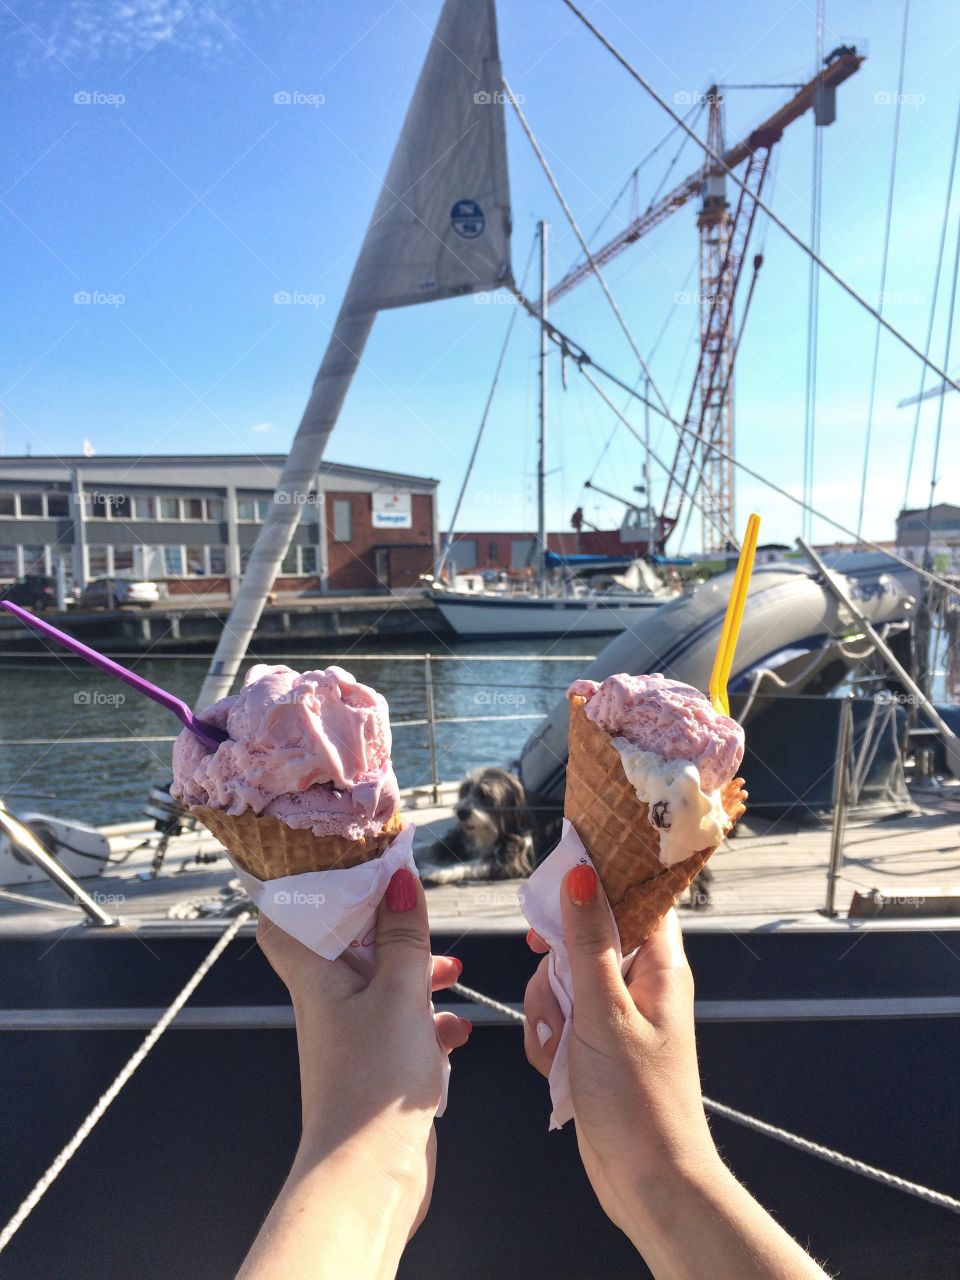 Best summer break with ice cream